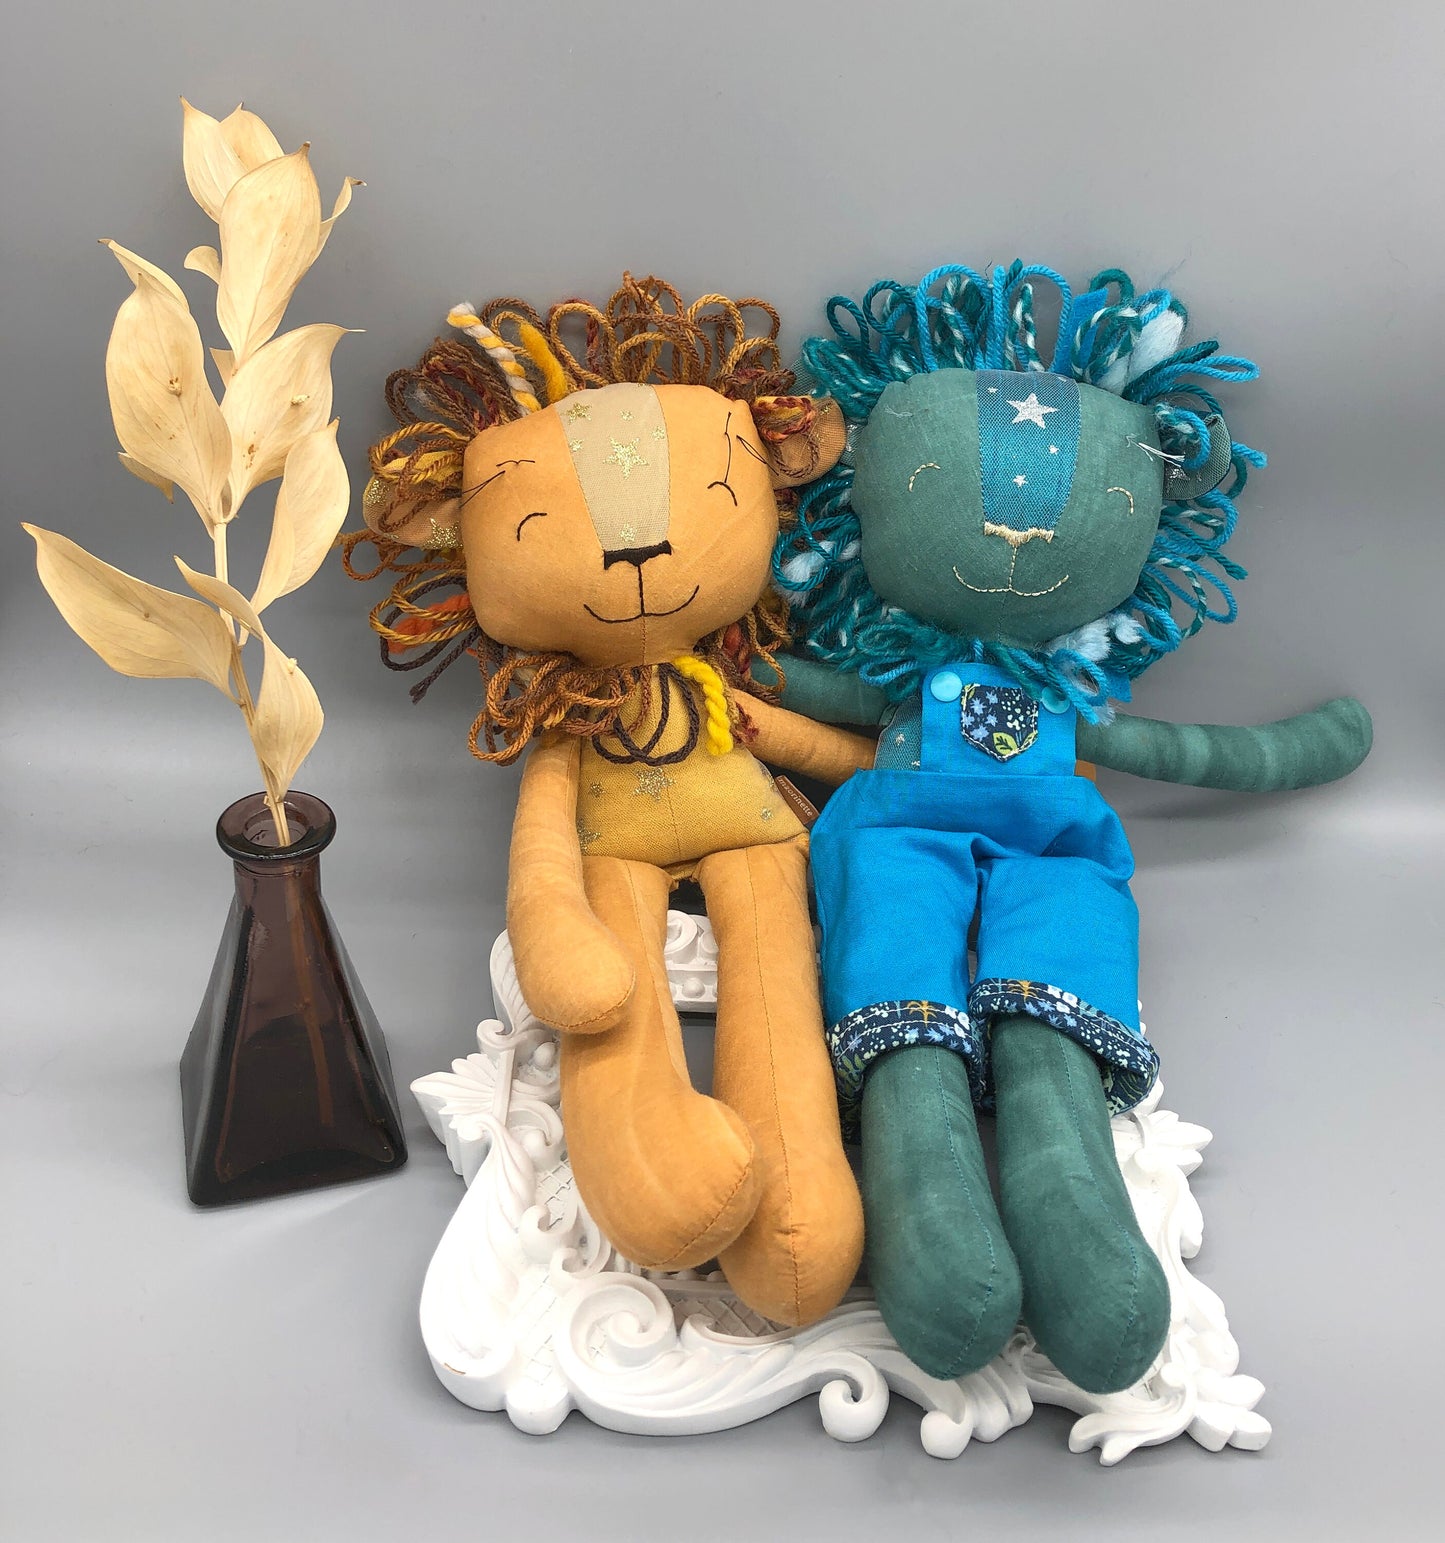 Handmade Lion Doll, "LINUS", doll, rag doll, unique, stuffed animals, stuffed lion, boy doll, blue lion, lion toy, gift for kids, cotton